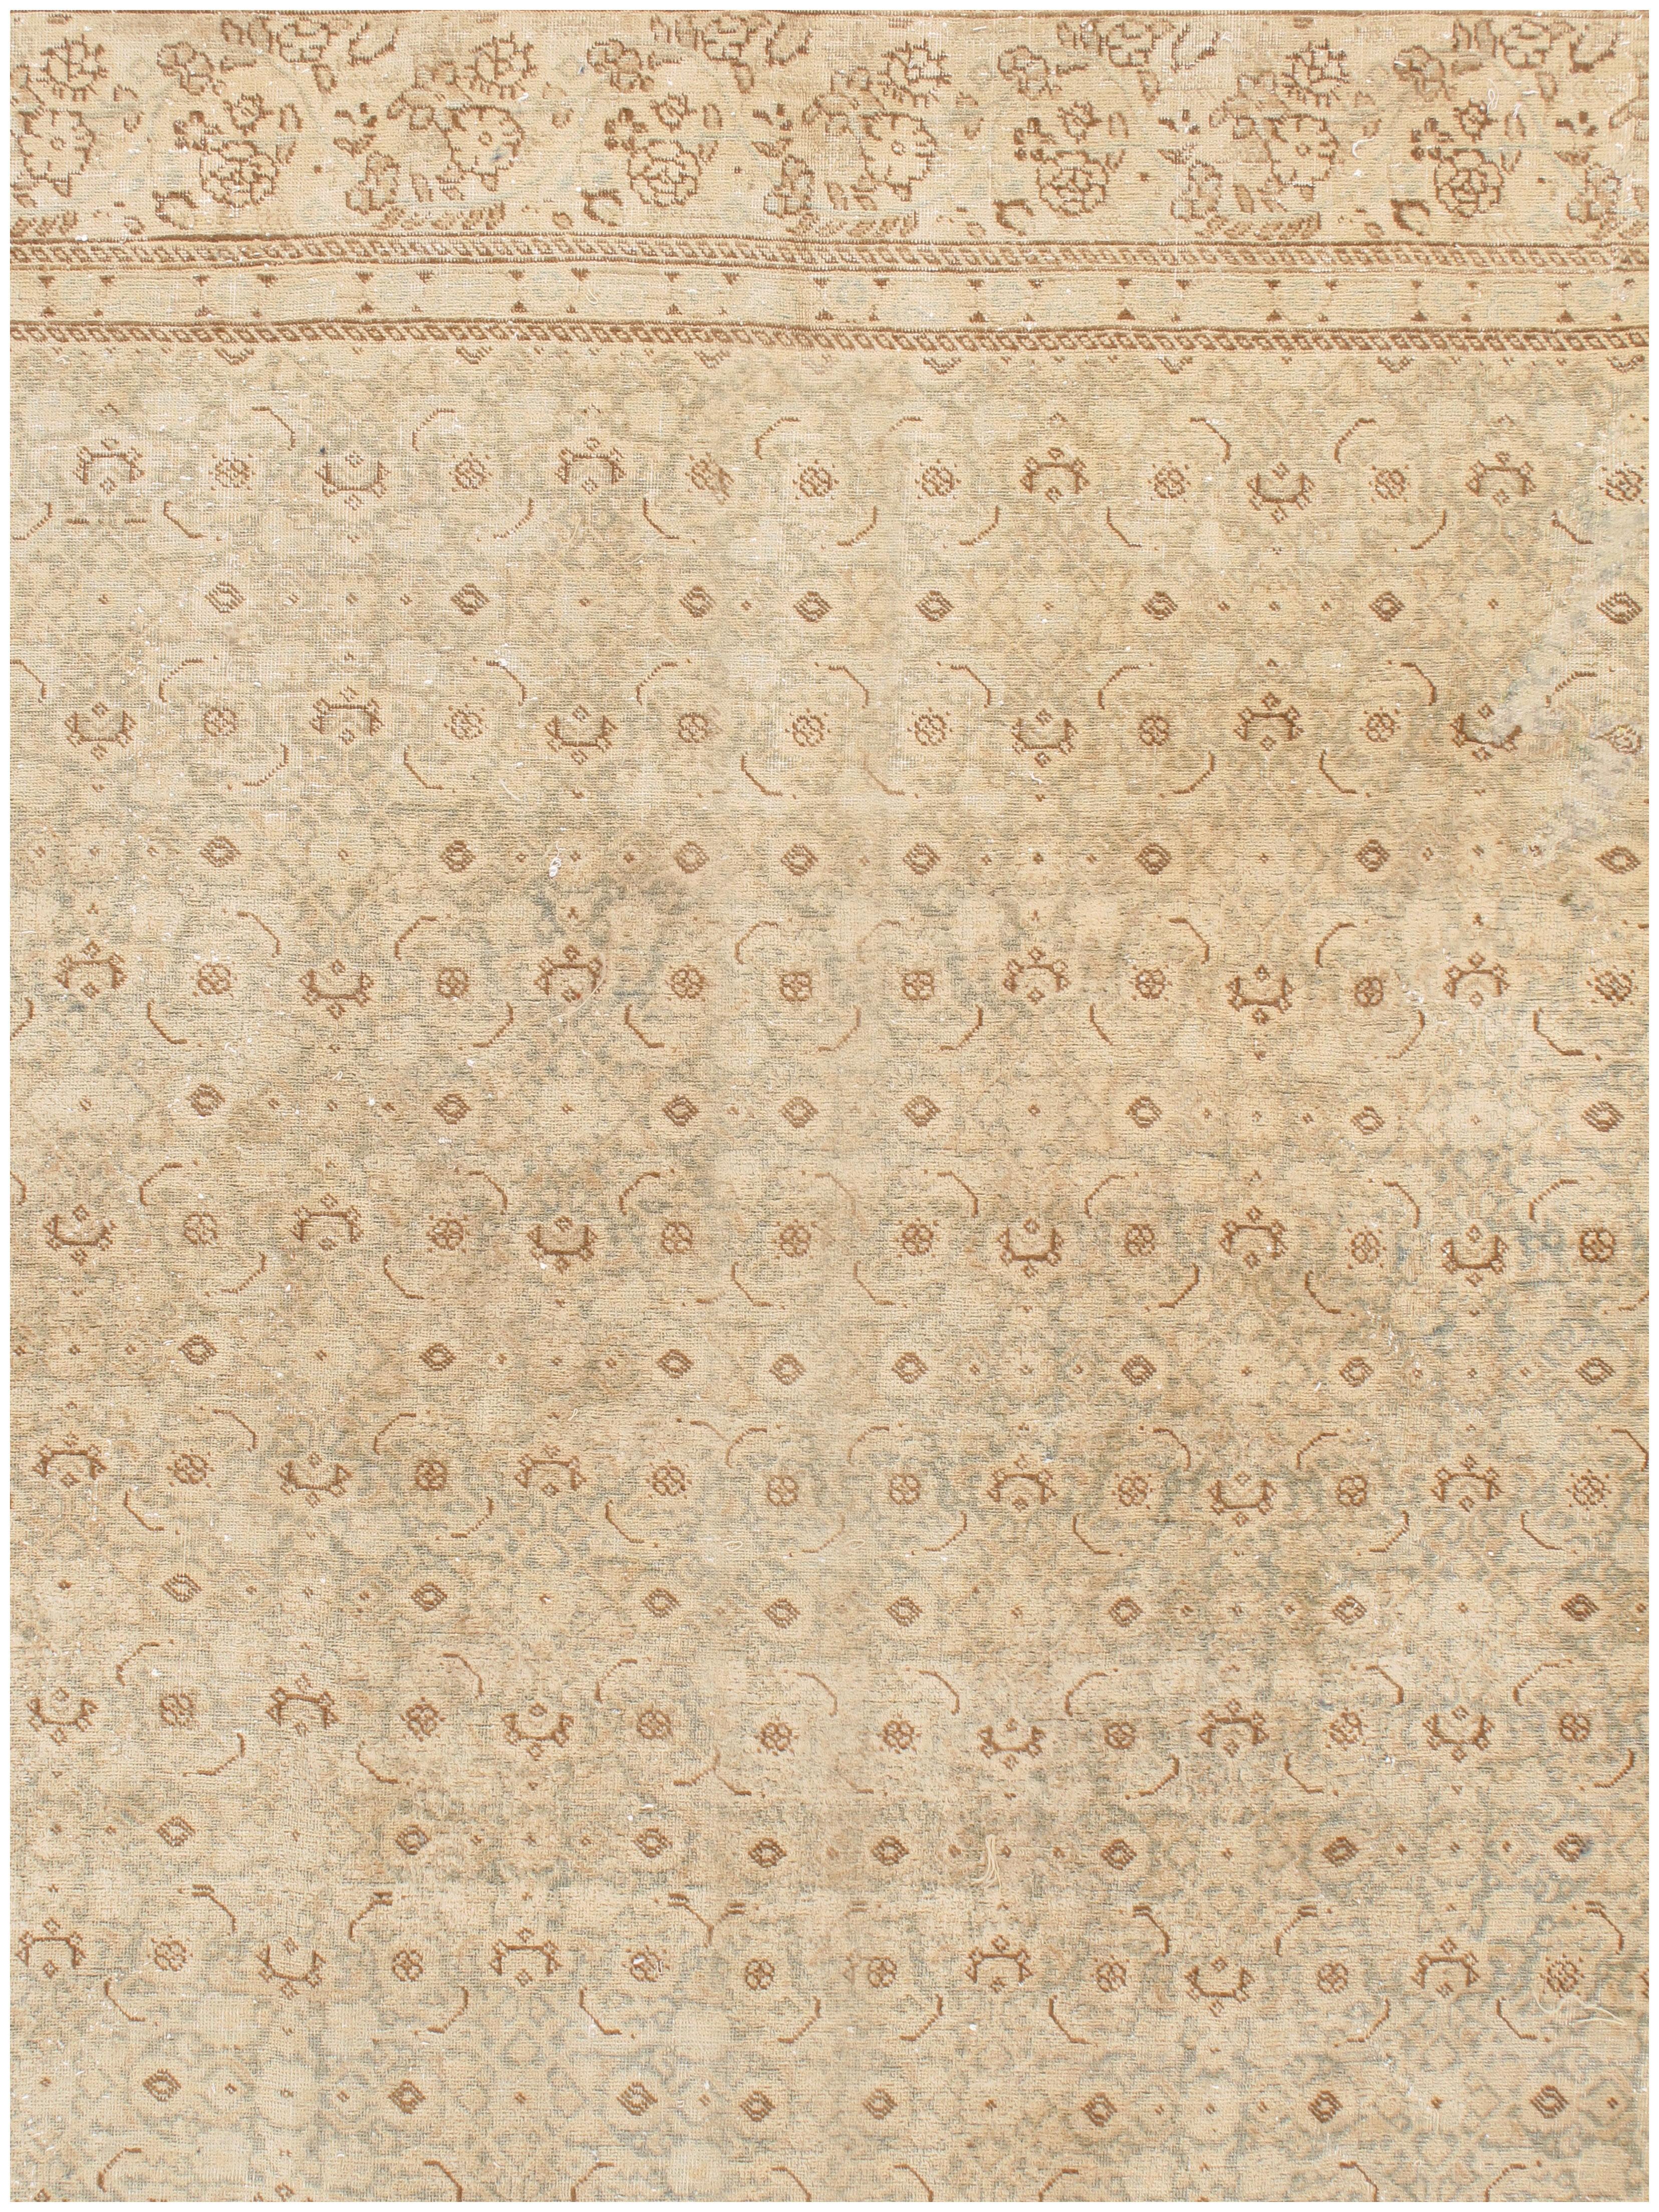 Hand-Woven Vintage Distressed Persian Tabriz Rug Carpet, circa 1920  8'5 x 14'10